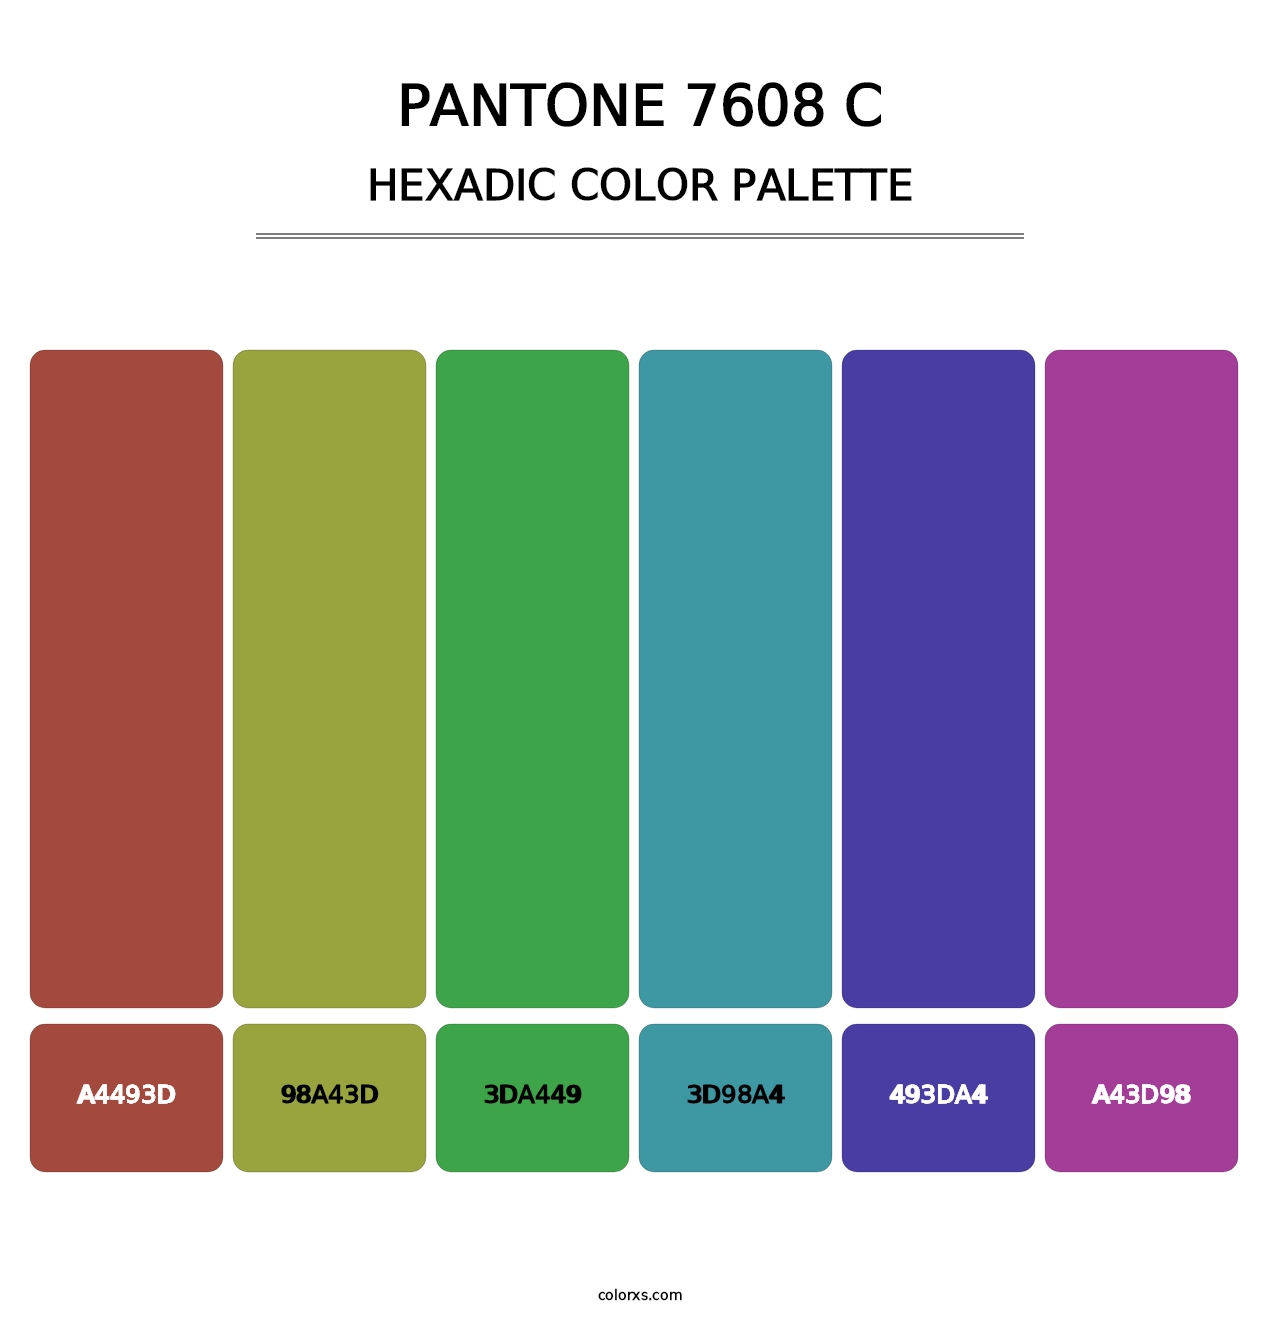 PANTONE 7608 C - Hexadic Color Palette